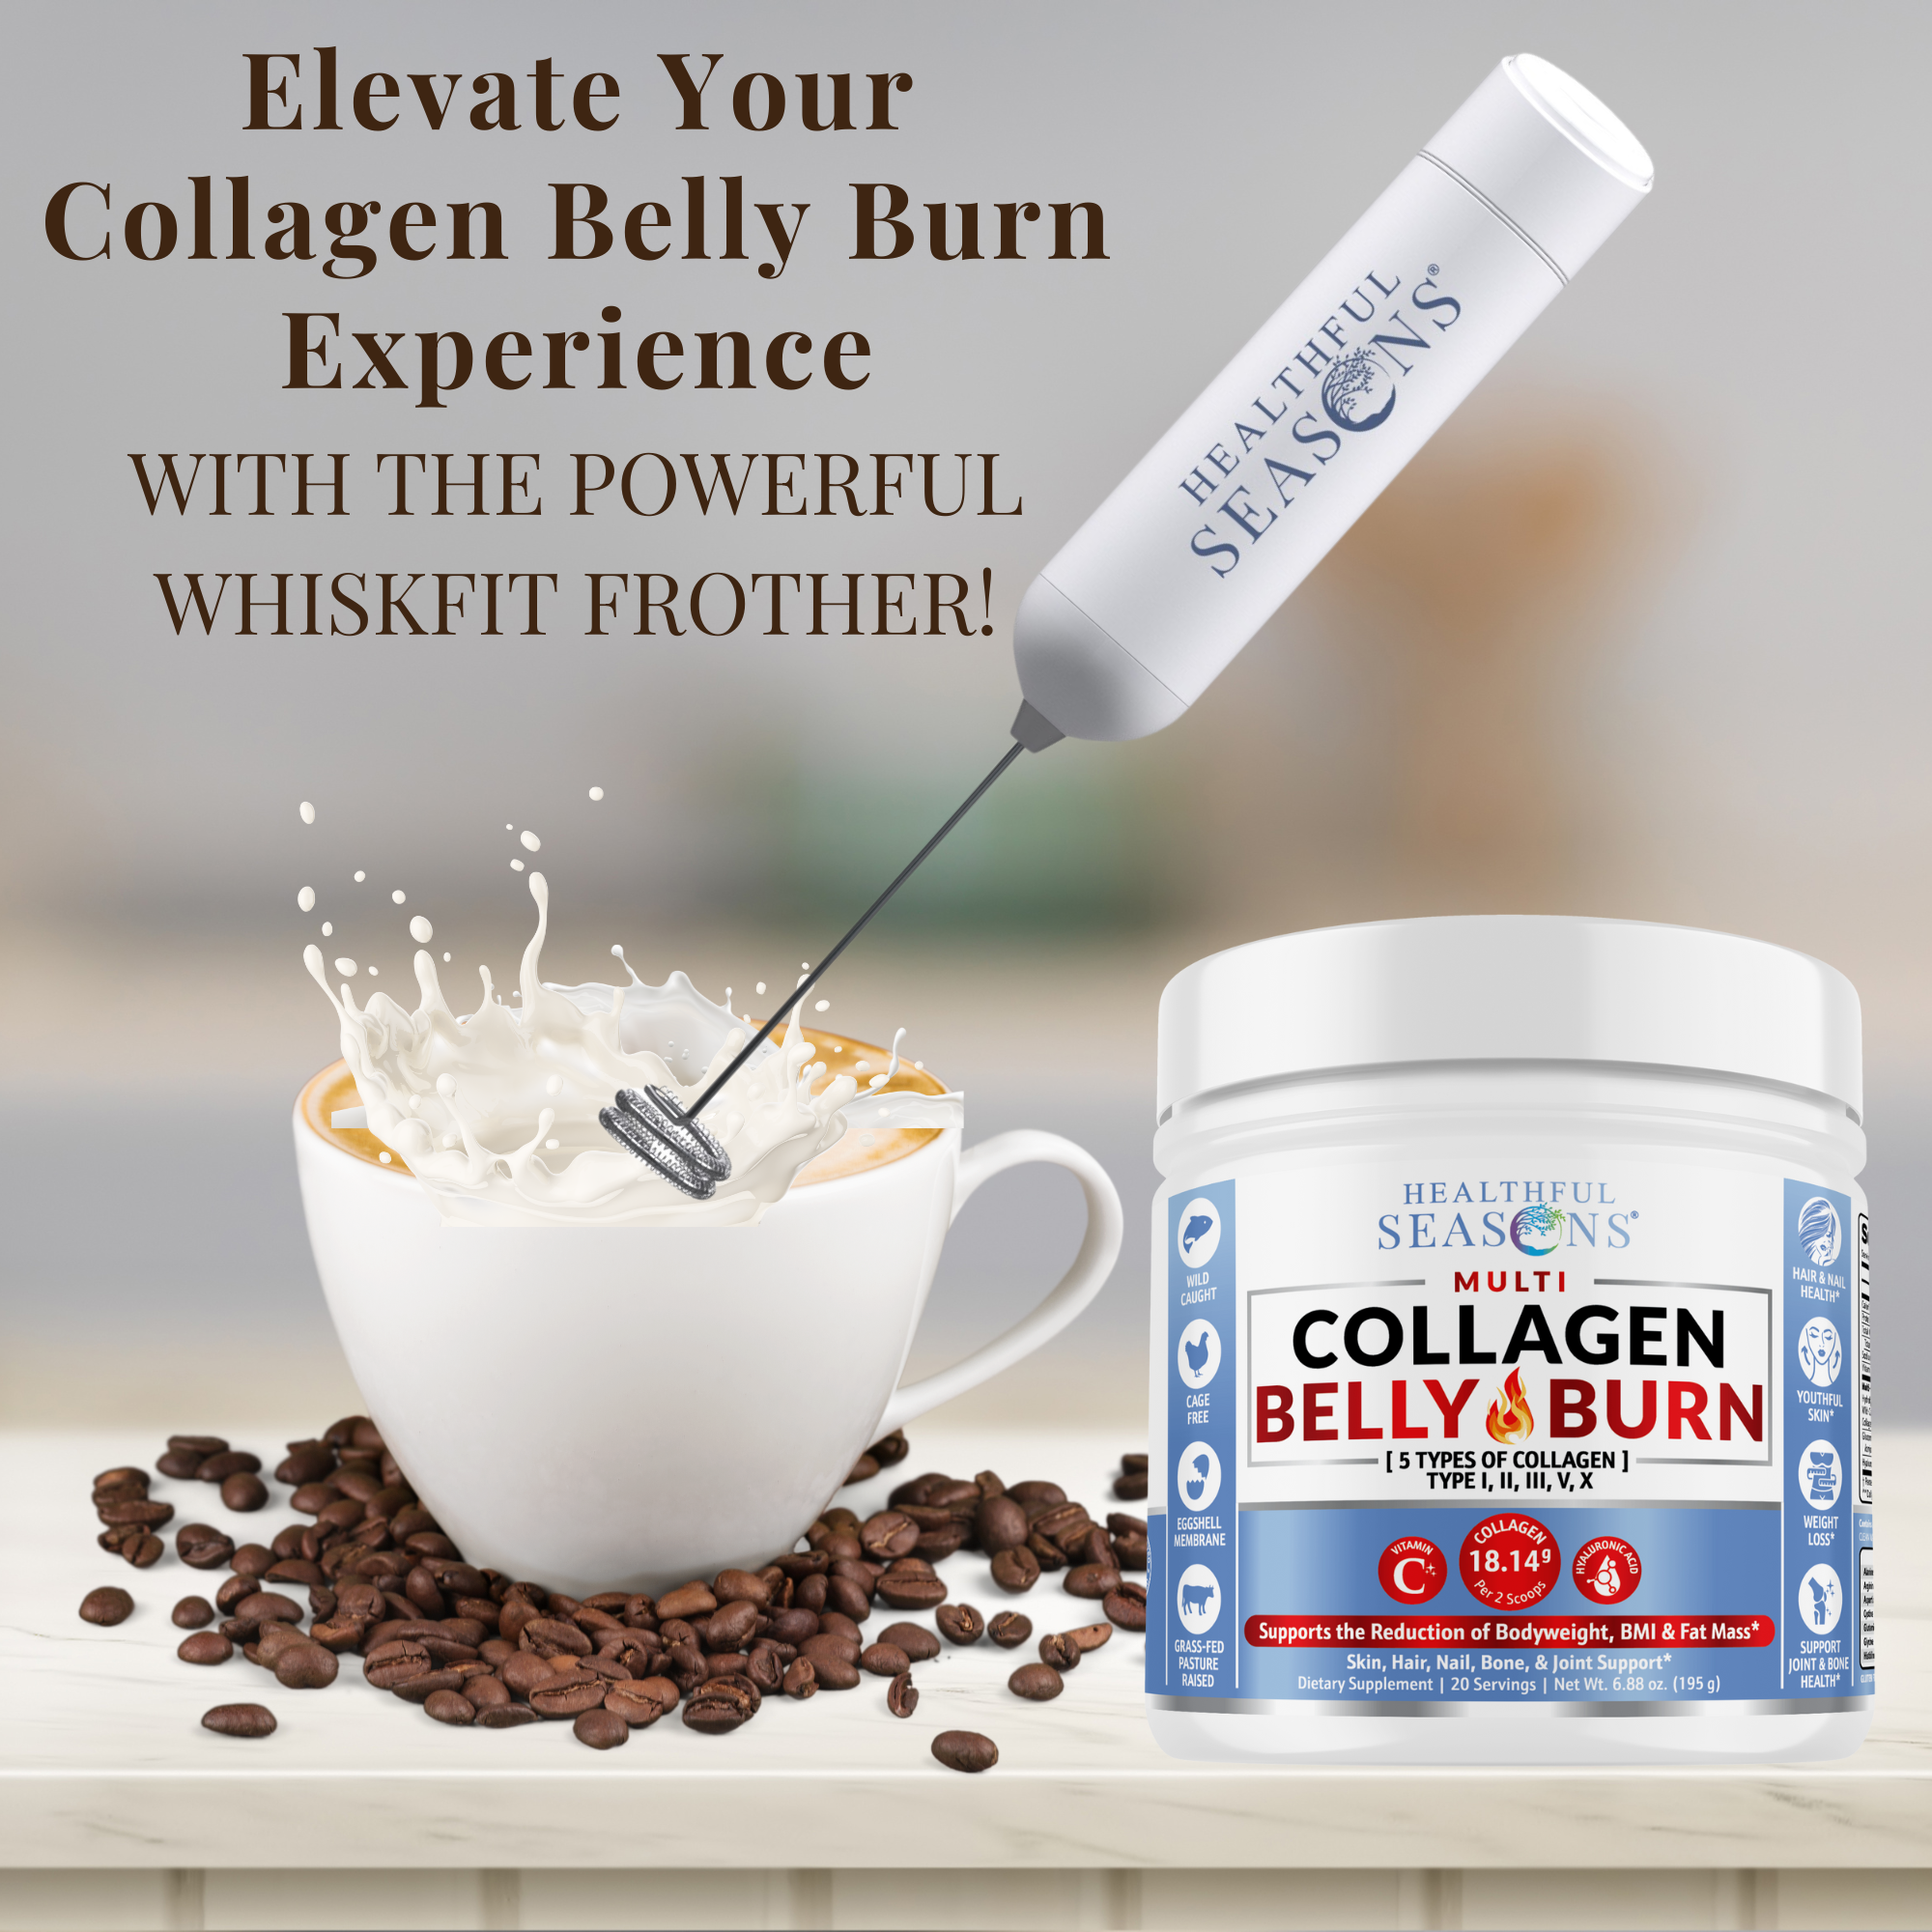 Multi Collagen Belly Burn